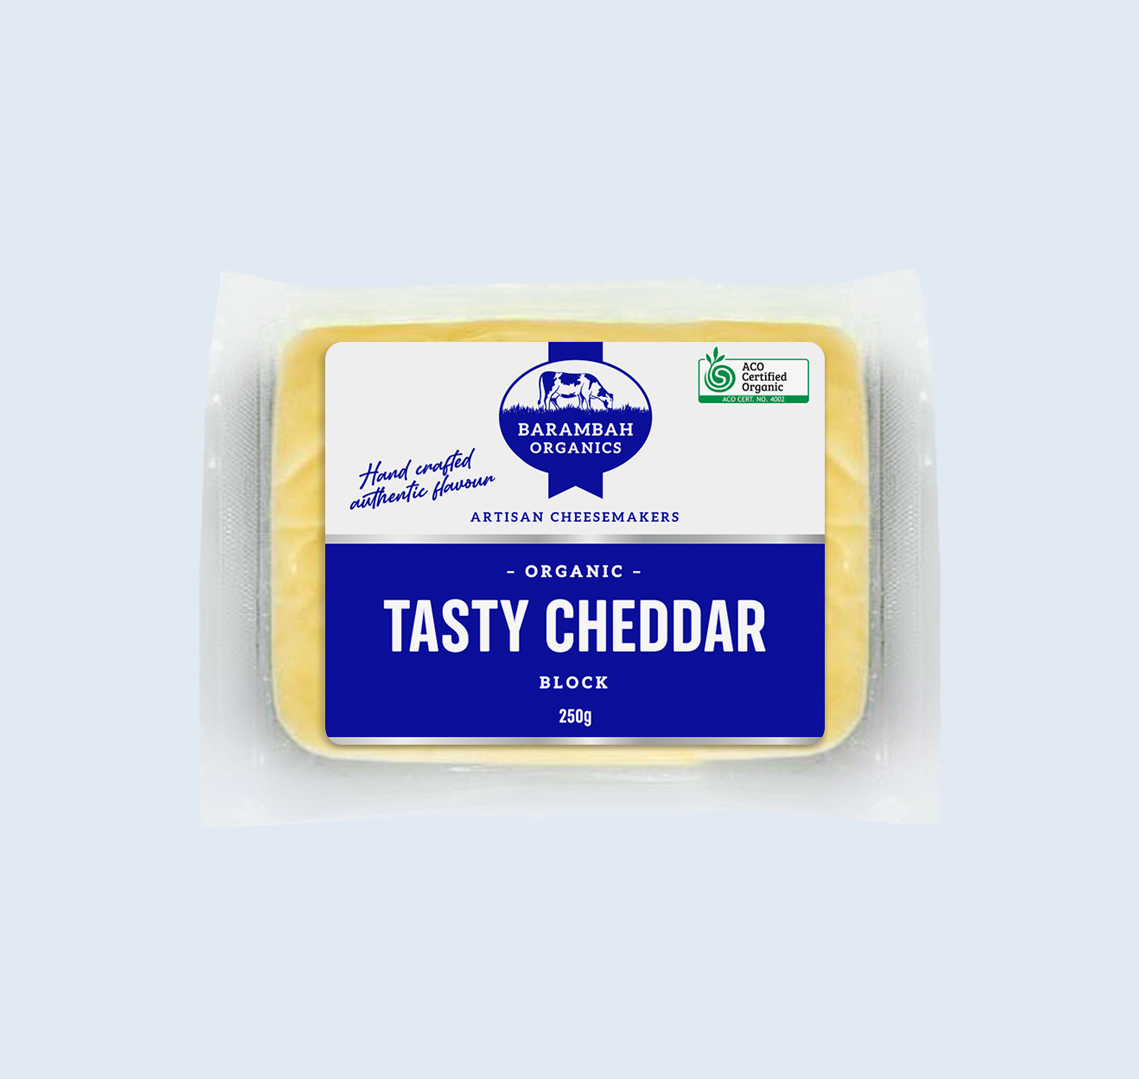 250g of Organic Tasty Cheddar - Organic Cheddar Cheese - Barambah Organics